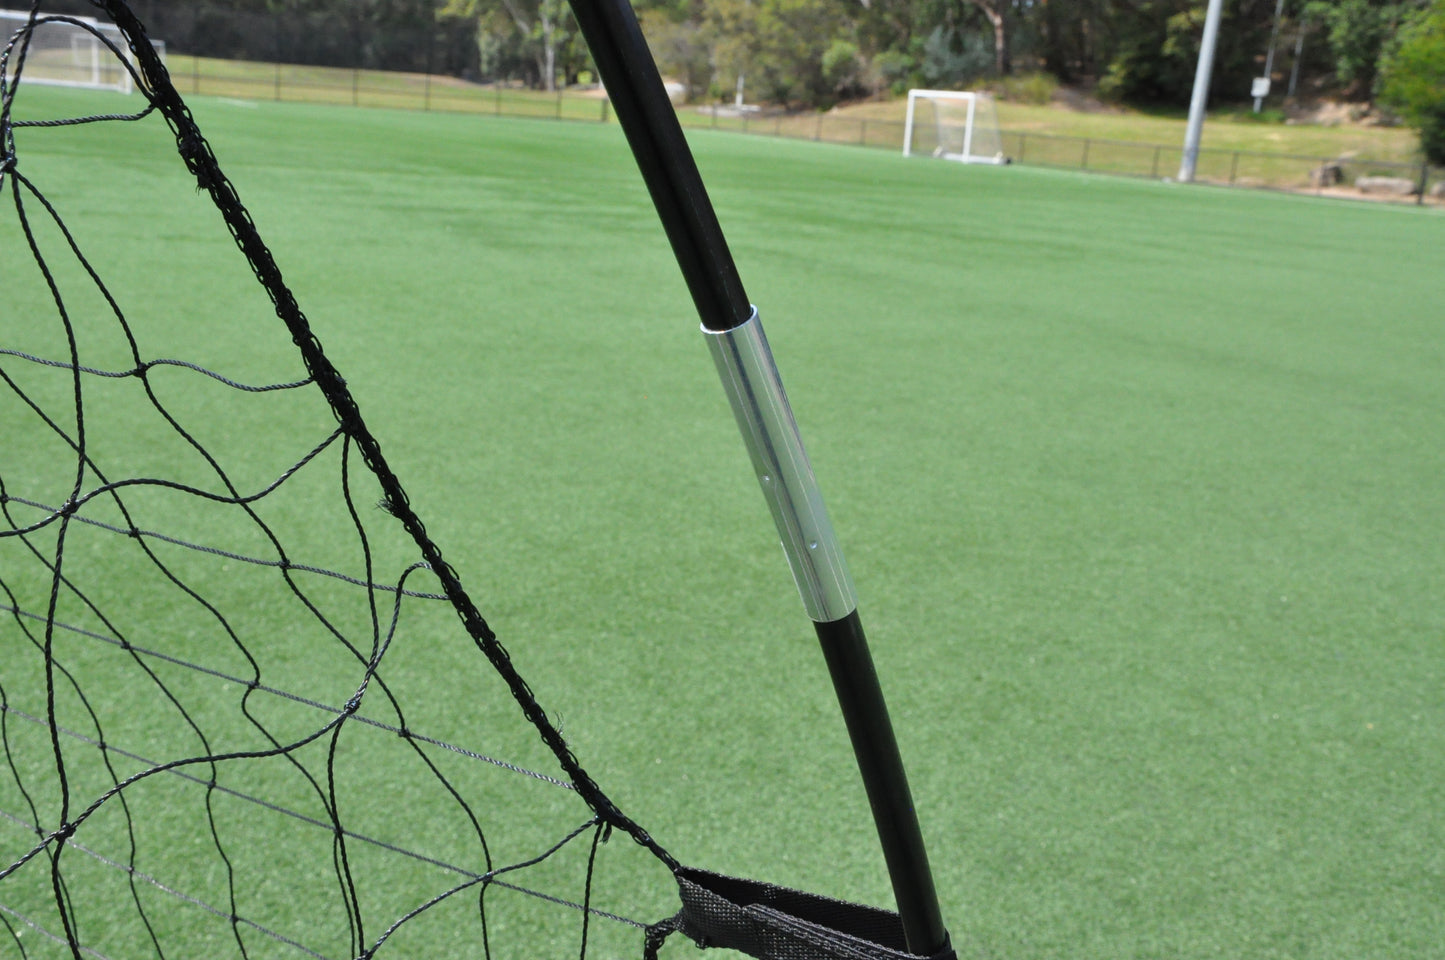 Torosports Elite Pop Up Soccer Goal 3.6m x 1.8m: Portable Goal for Football and Futsal